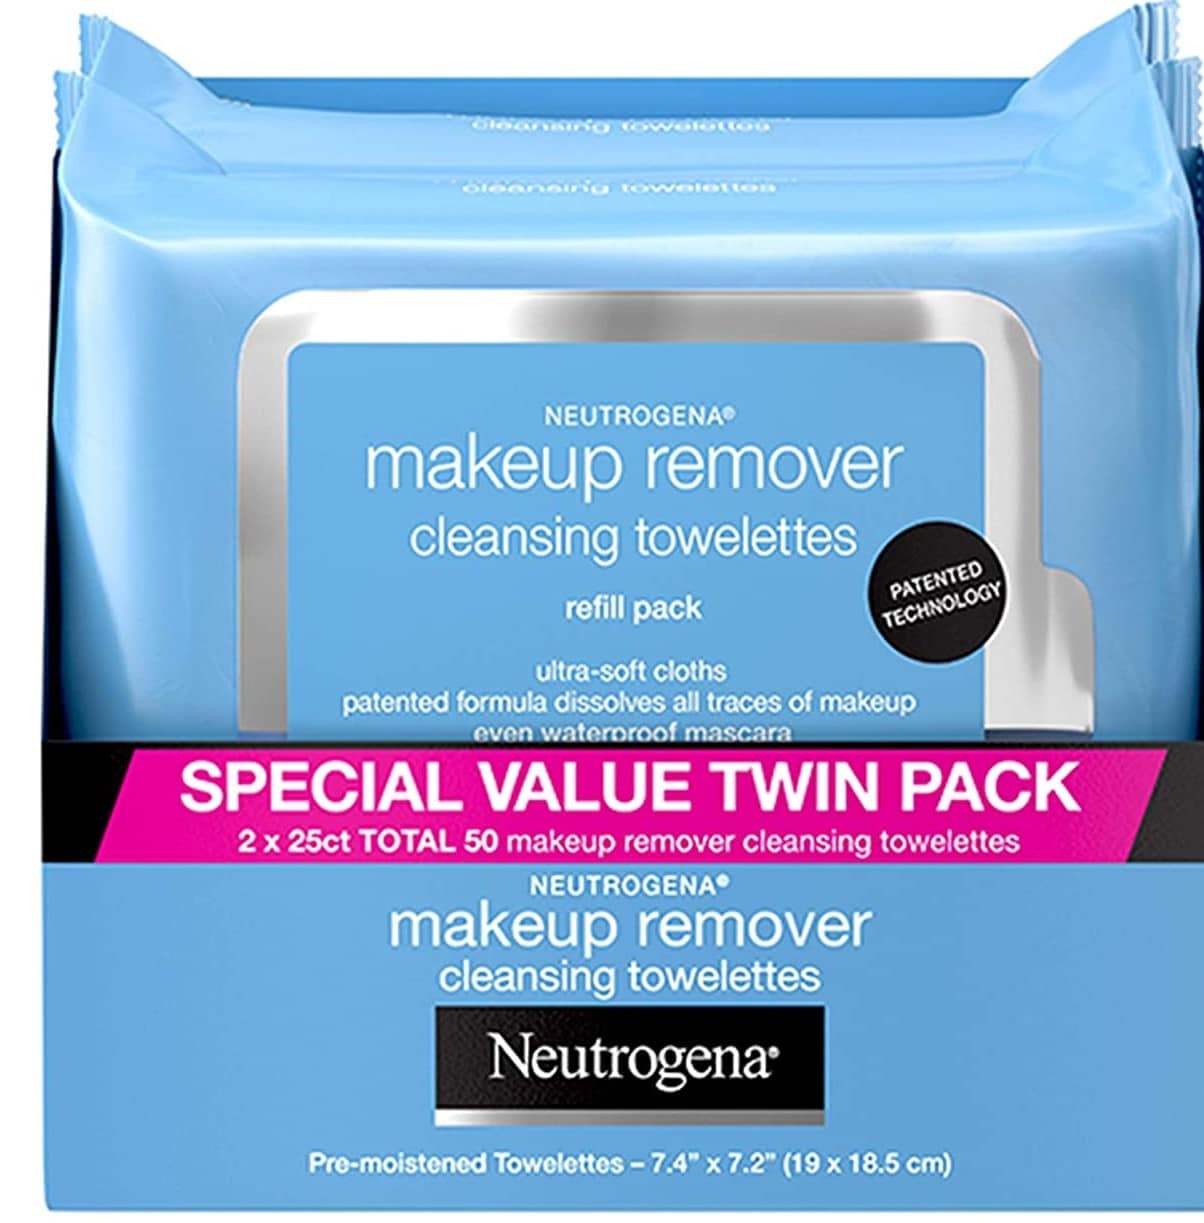 Neutrogena Makeup Remover Wipes